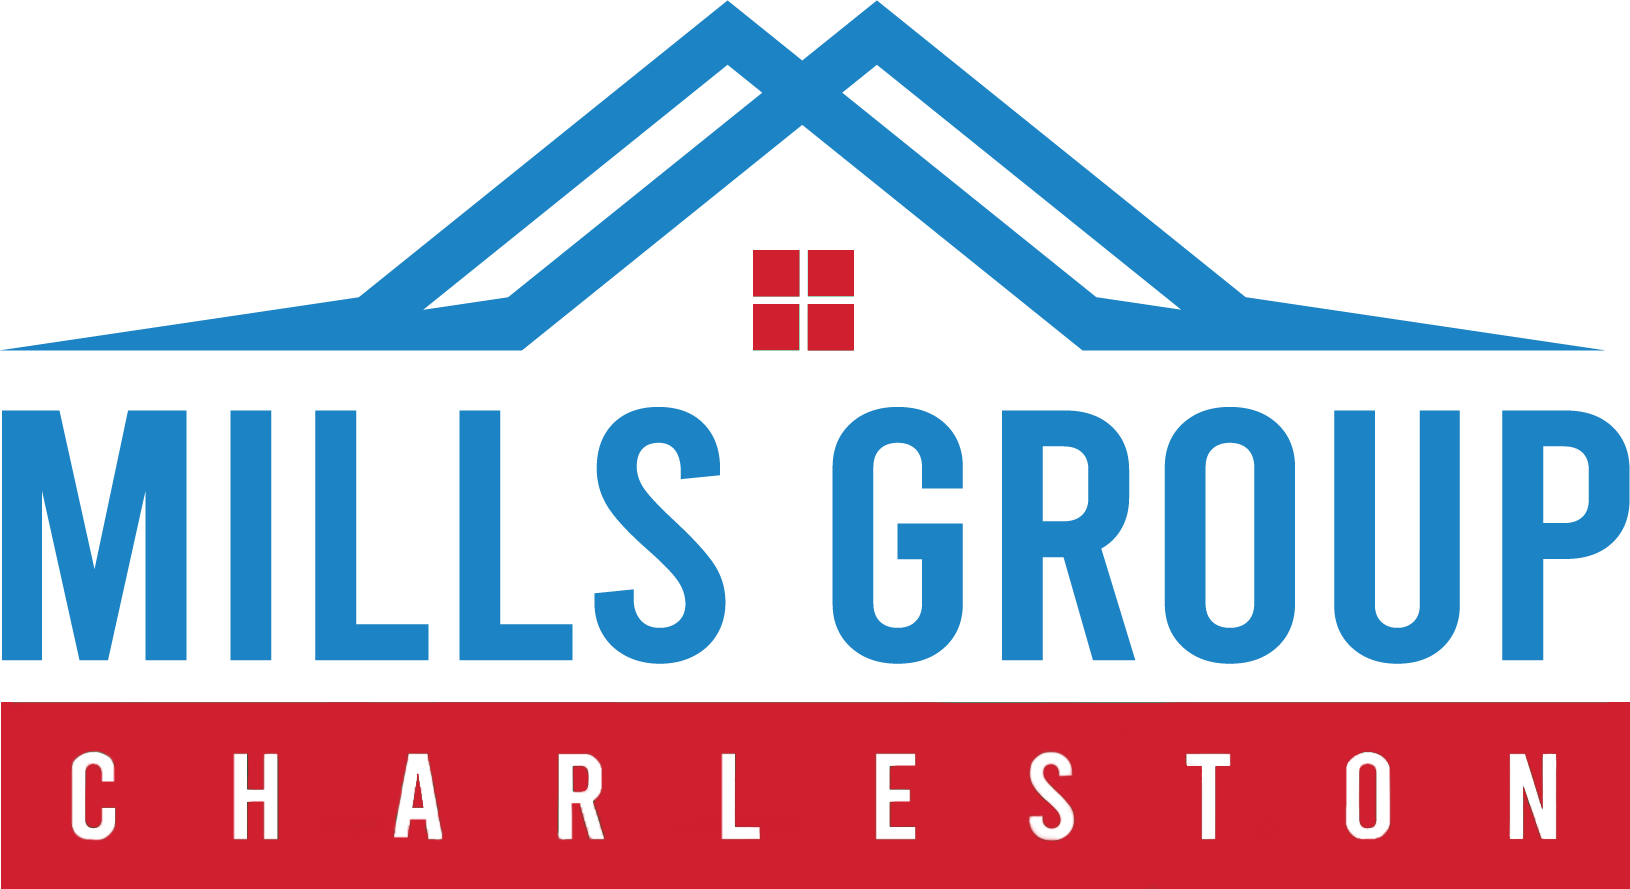 The Mills Group Charleston